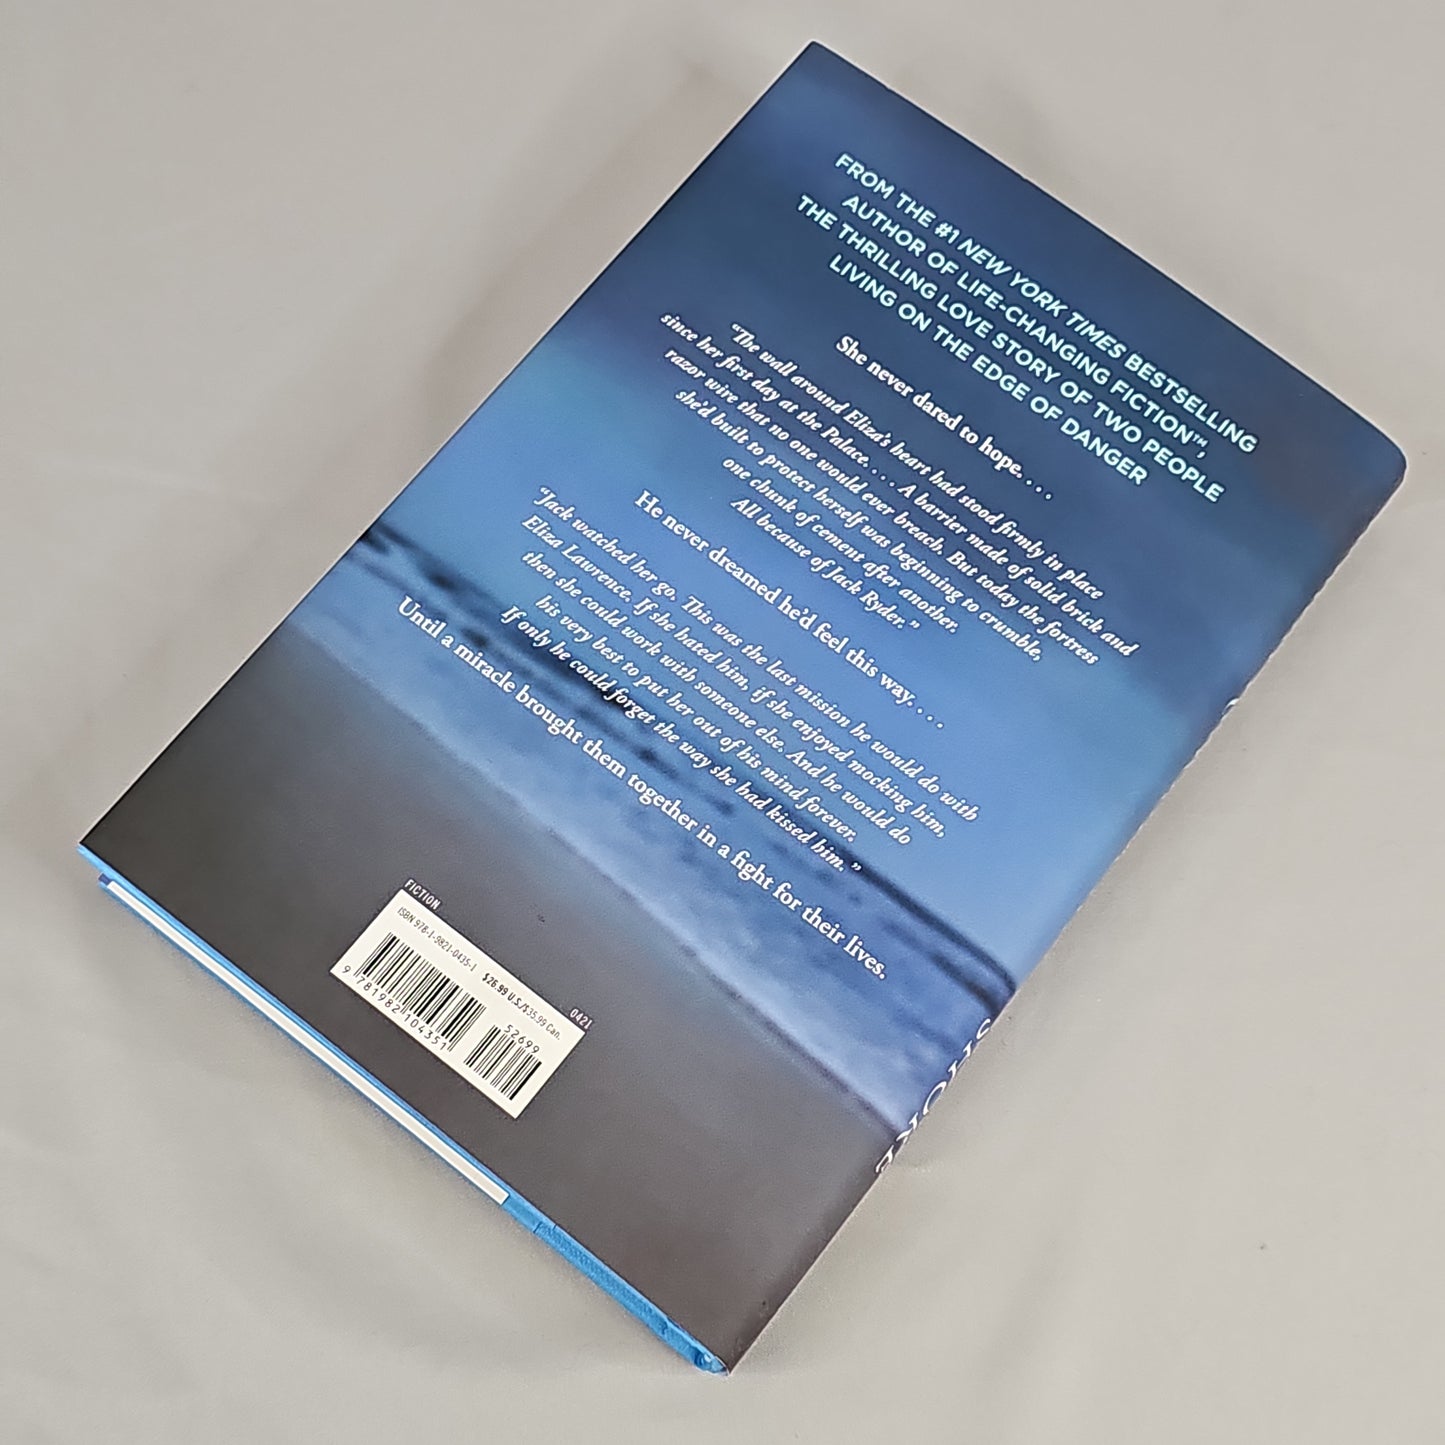 A DISTANT SHORE by Karen Kingsbury Book Hardback (New)